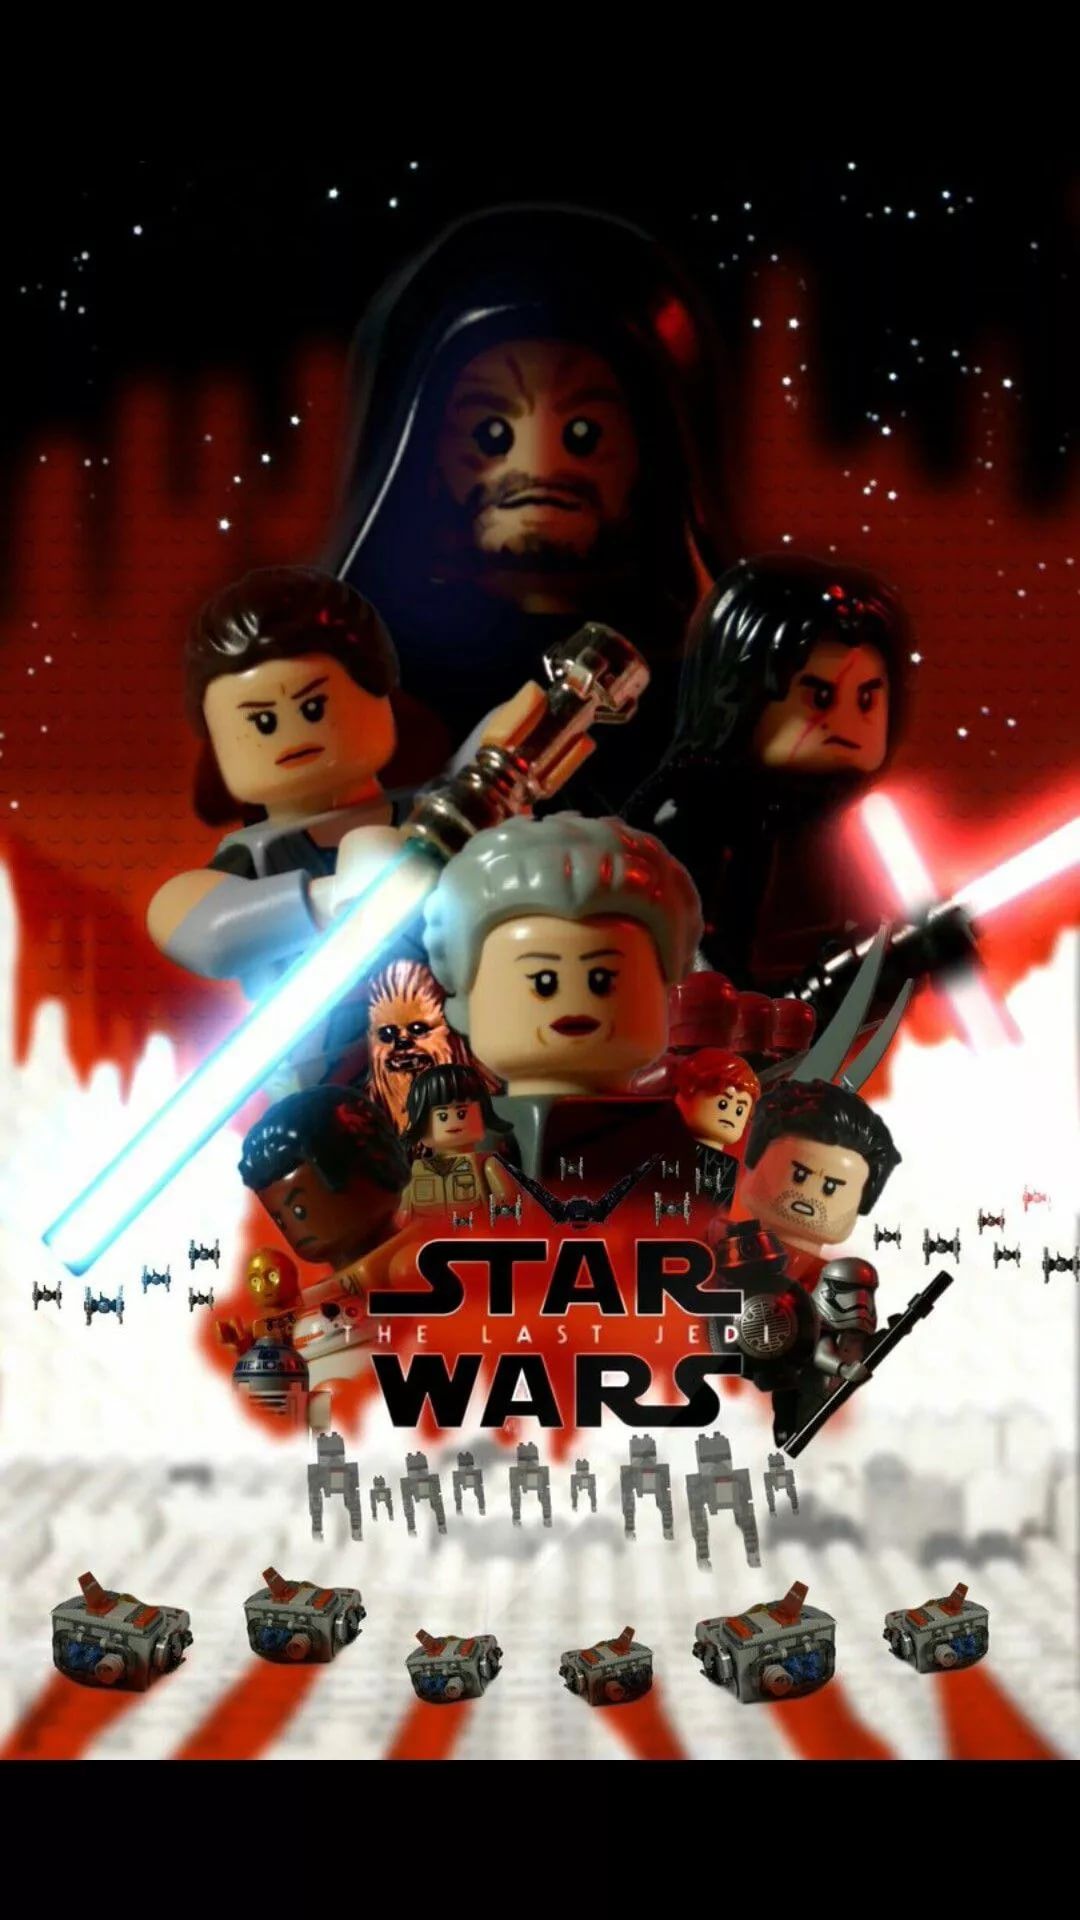 Lego Star Wars iPhone 6 wallpaper